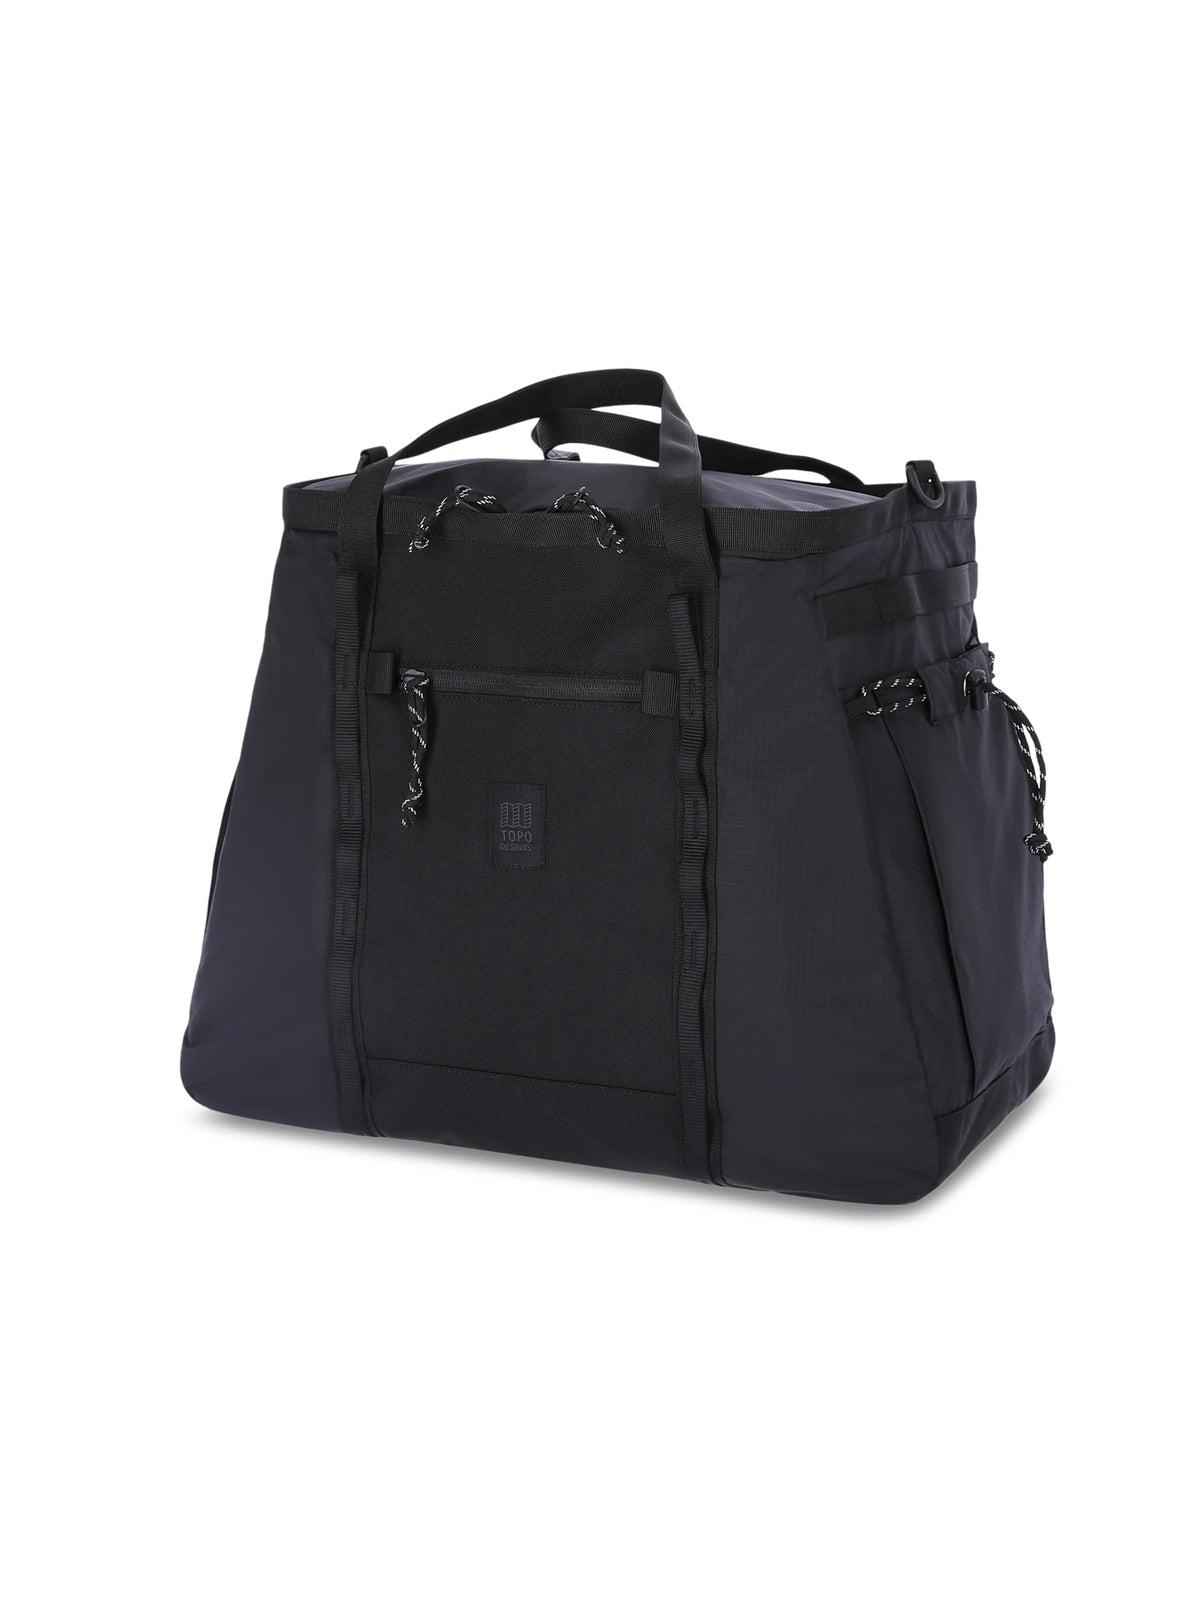 Topo Designs Mountain Gear Bag Black Black